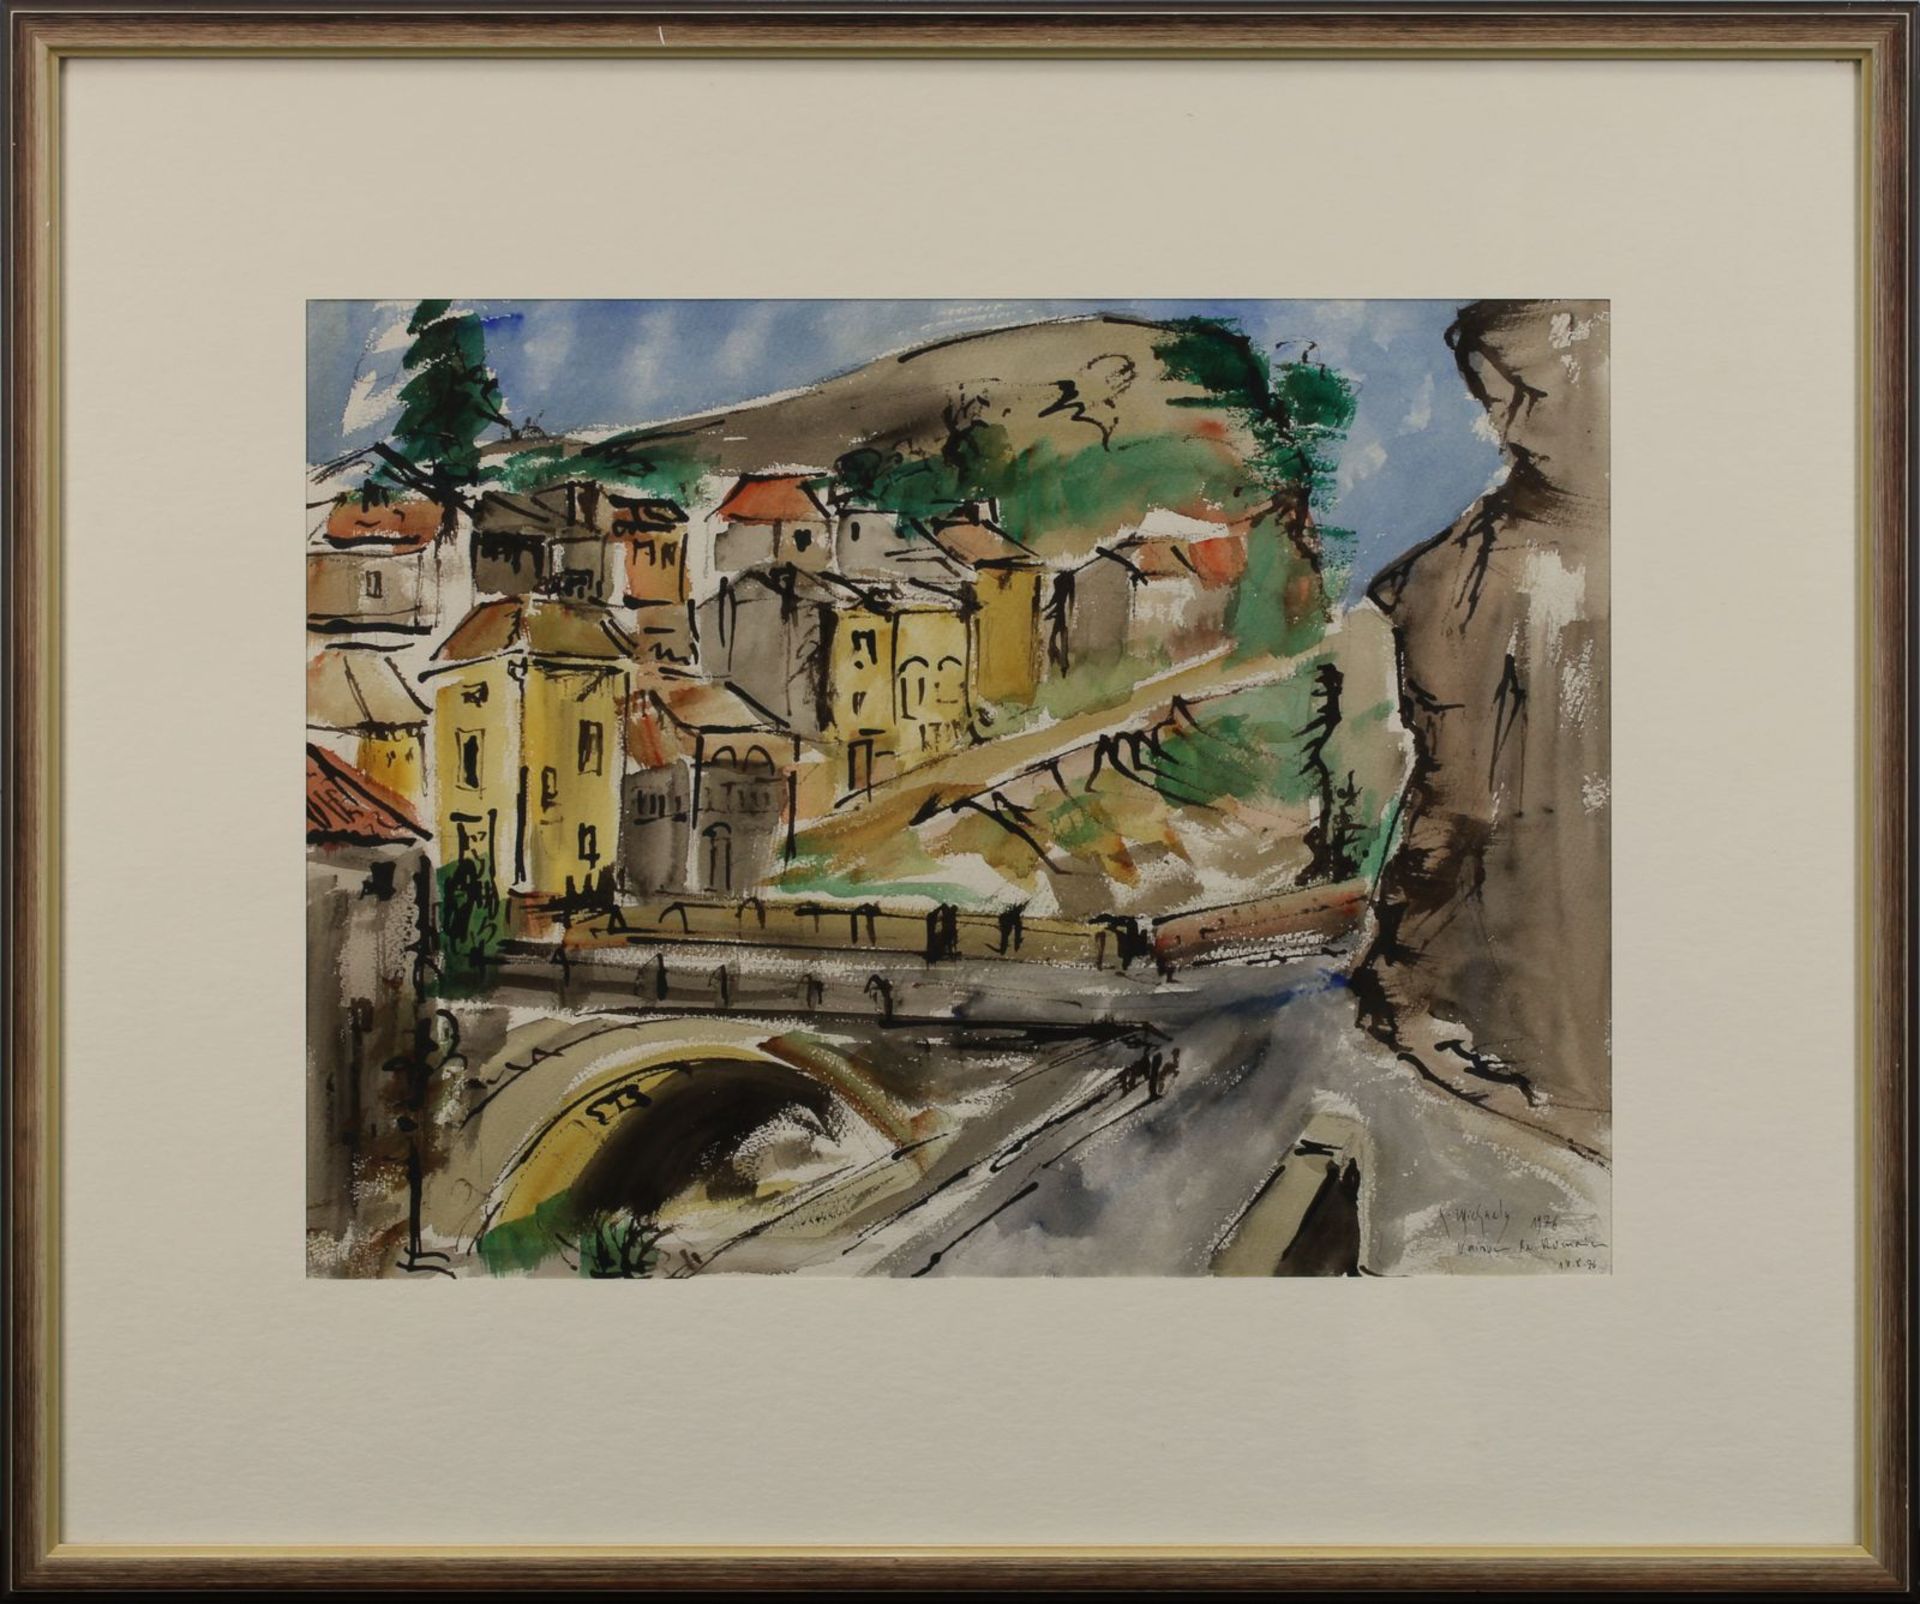 Michaely, Karl (Elversberg 1922 - 2007 Dillingen), "Vaison-la-Romaine", Blick auf die Stadt mit